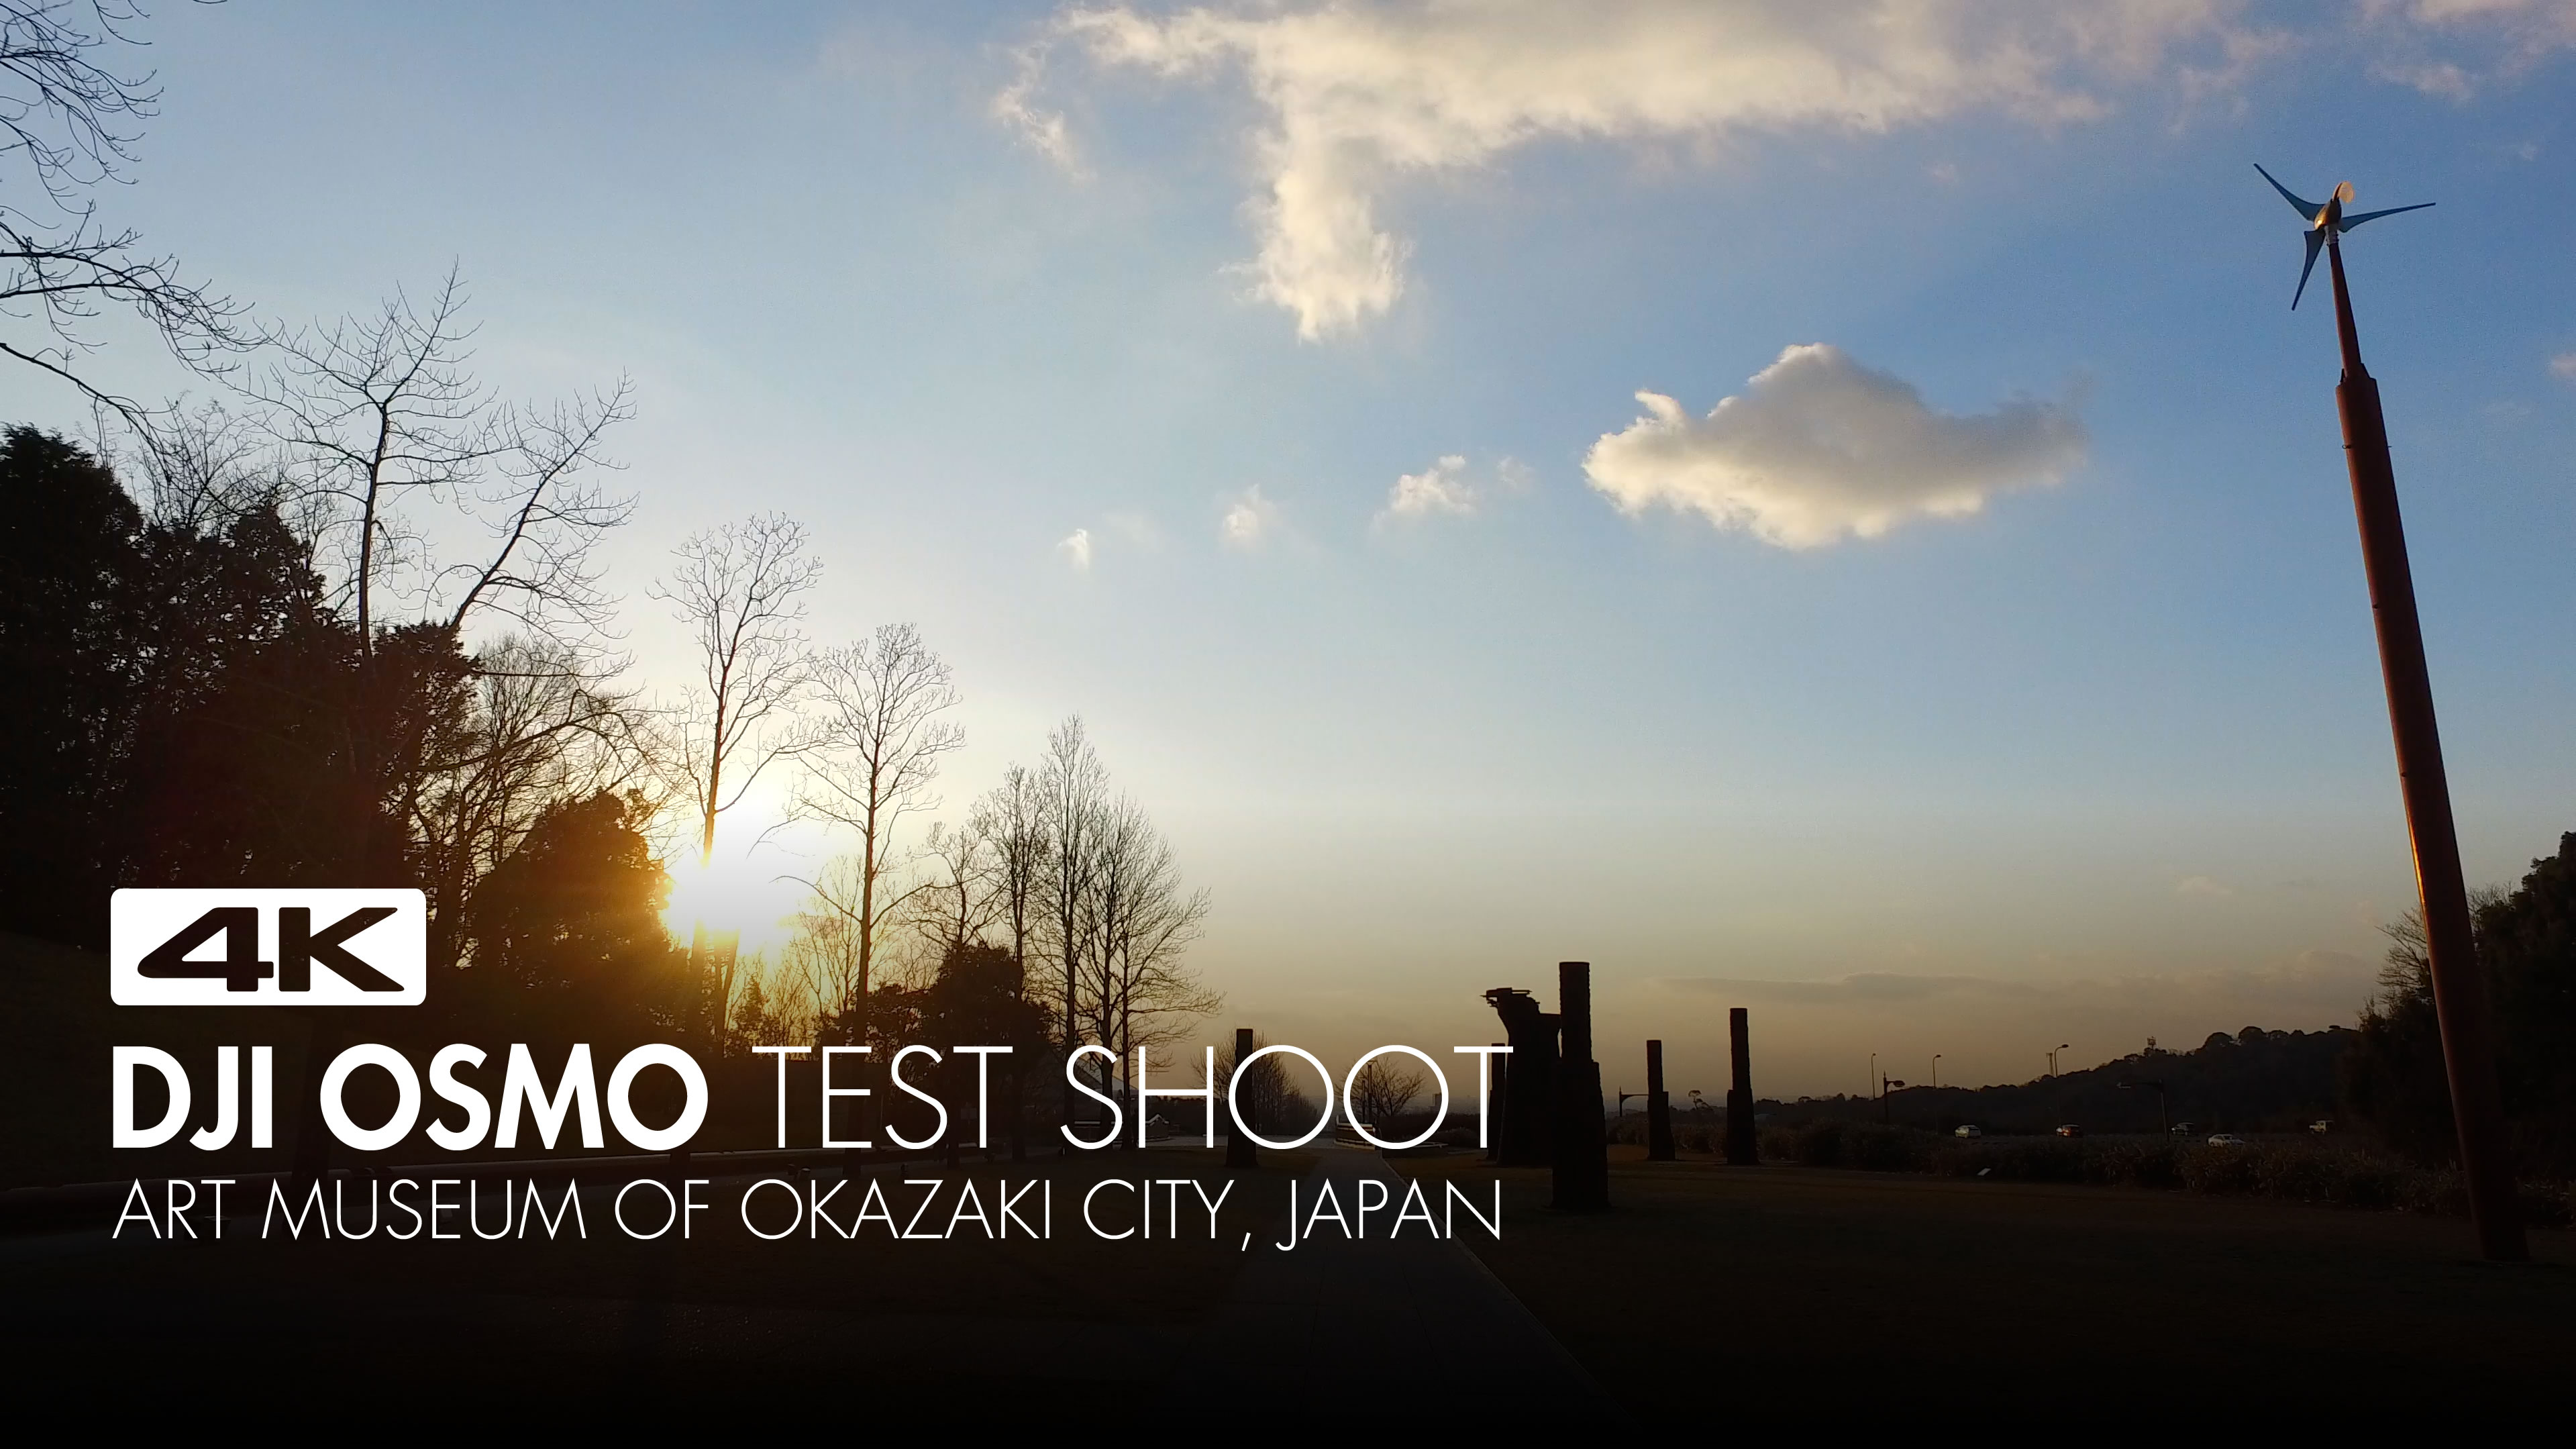 DJI OSMO Test shoot 4K